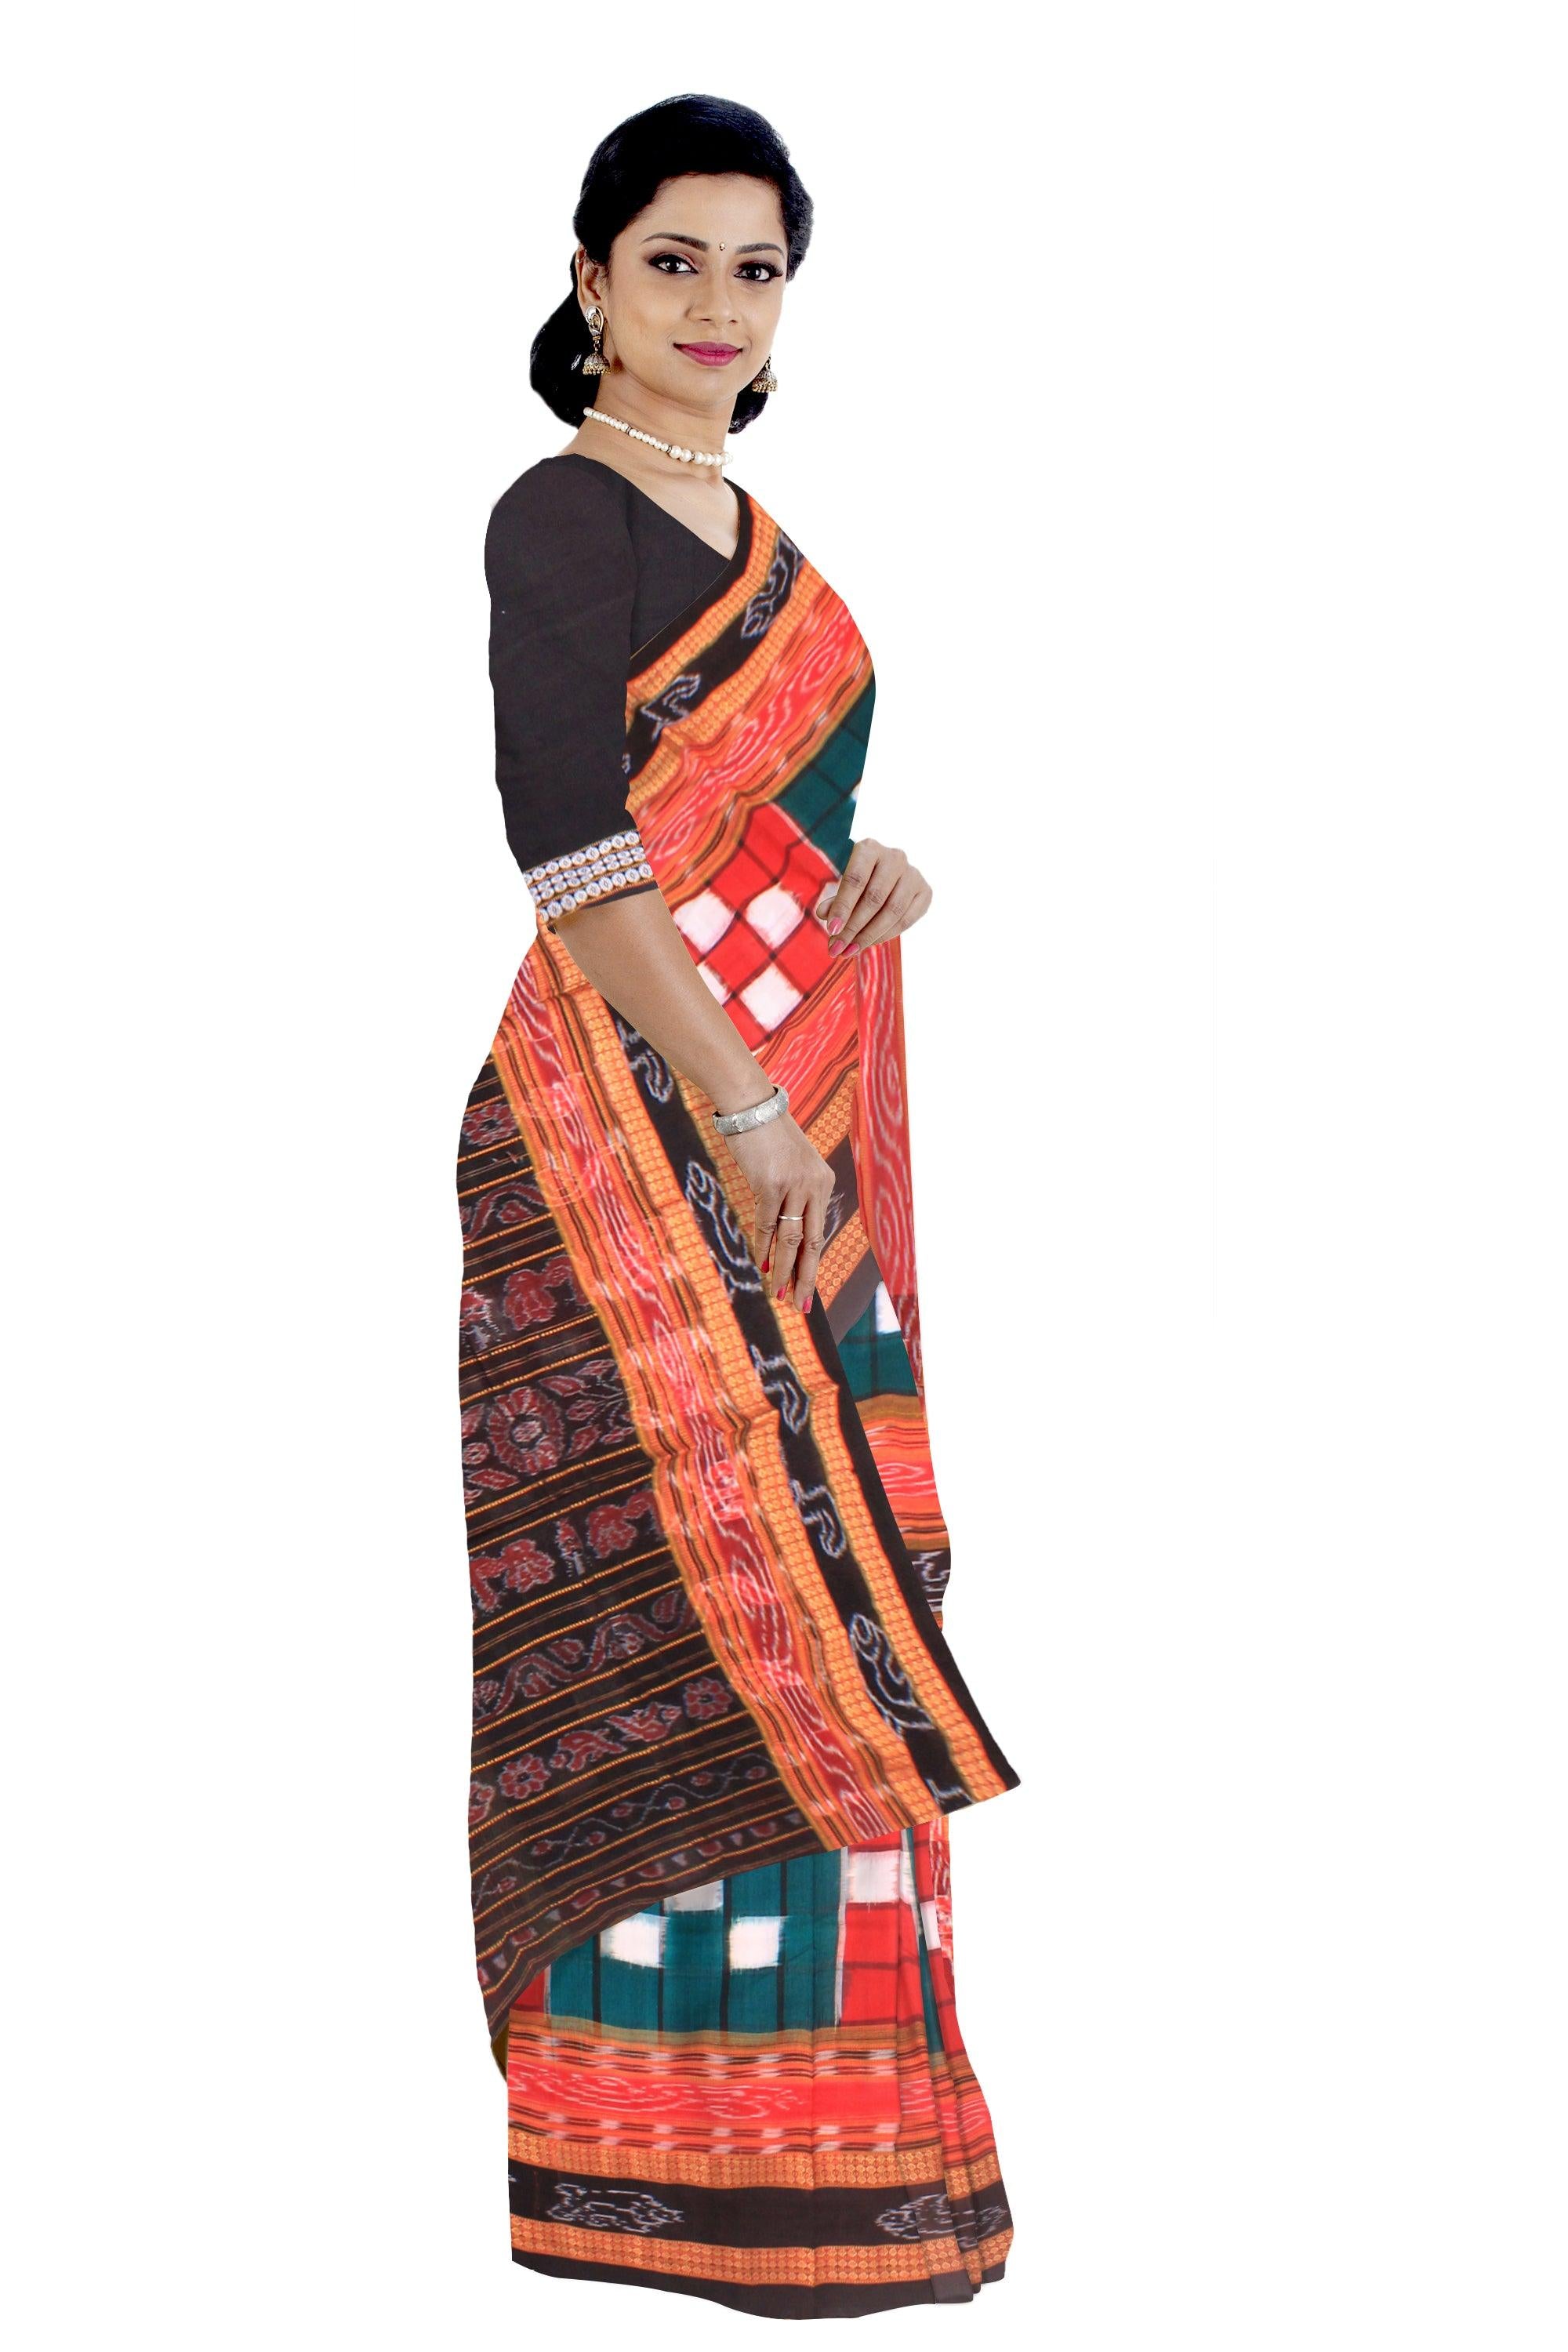 Bichitrapuri Sambalpuri Saree in  Maroon and Green colour without blouse piece. - Koshali Arts & Crafts Enterprise